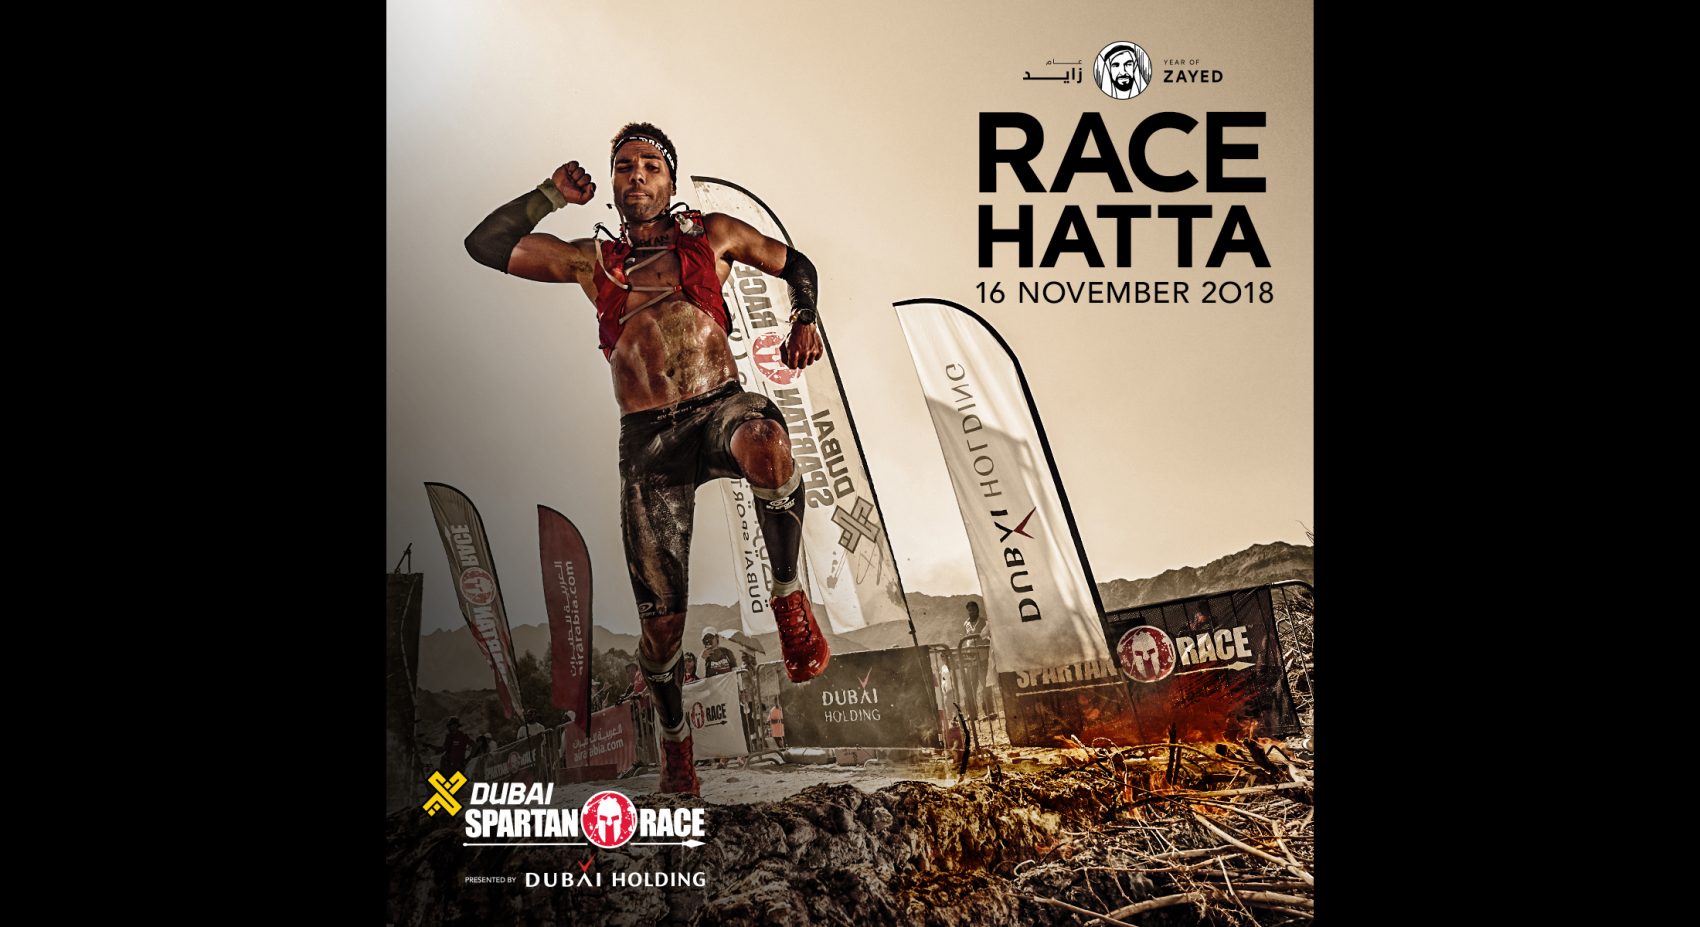 XDubai Spartan Hatta Race 2018 - Coming Soon in UAE